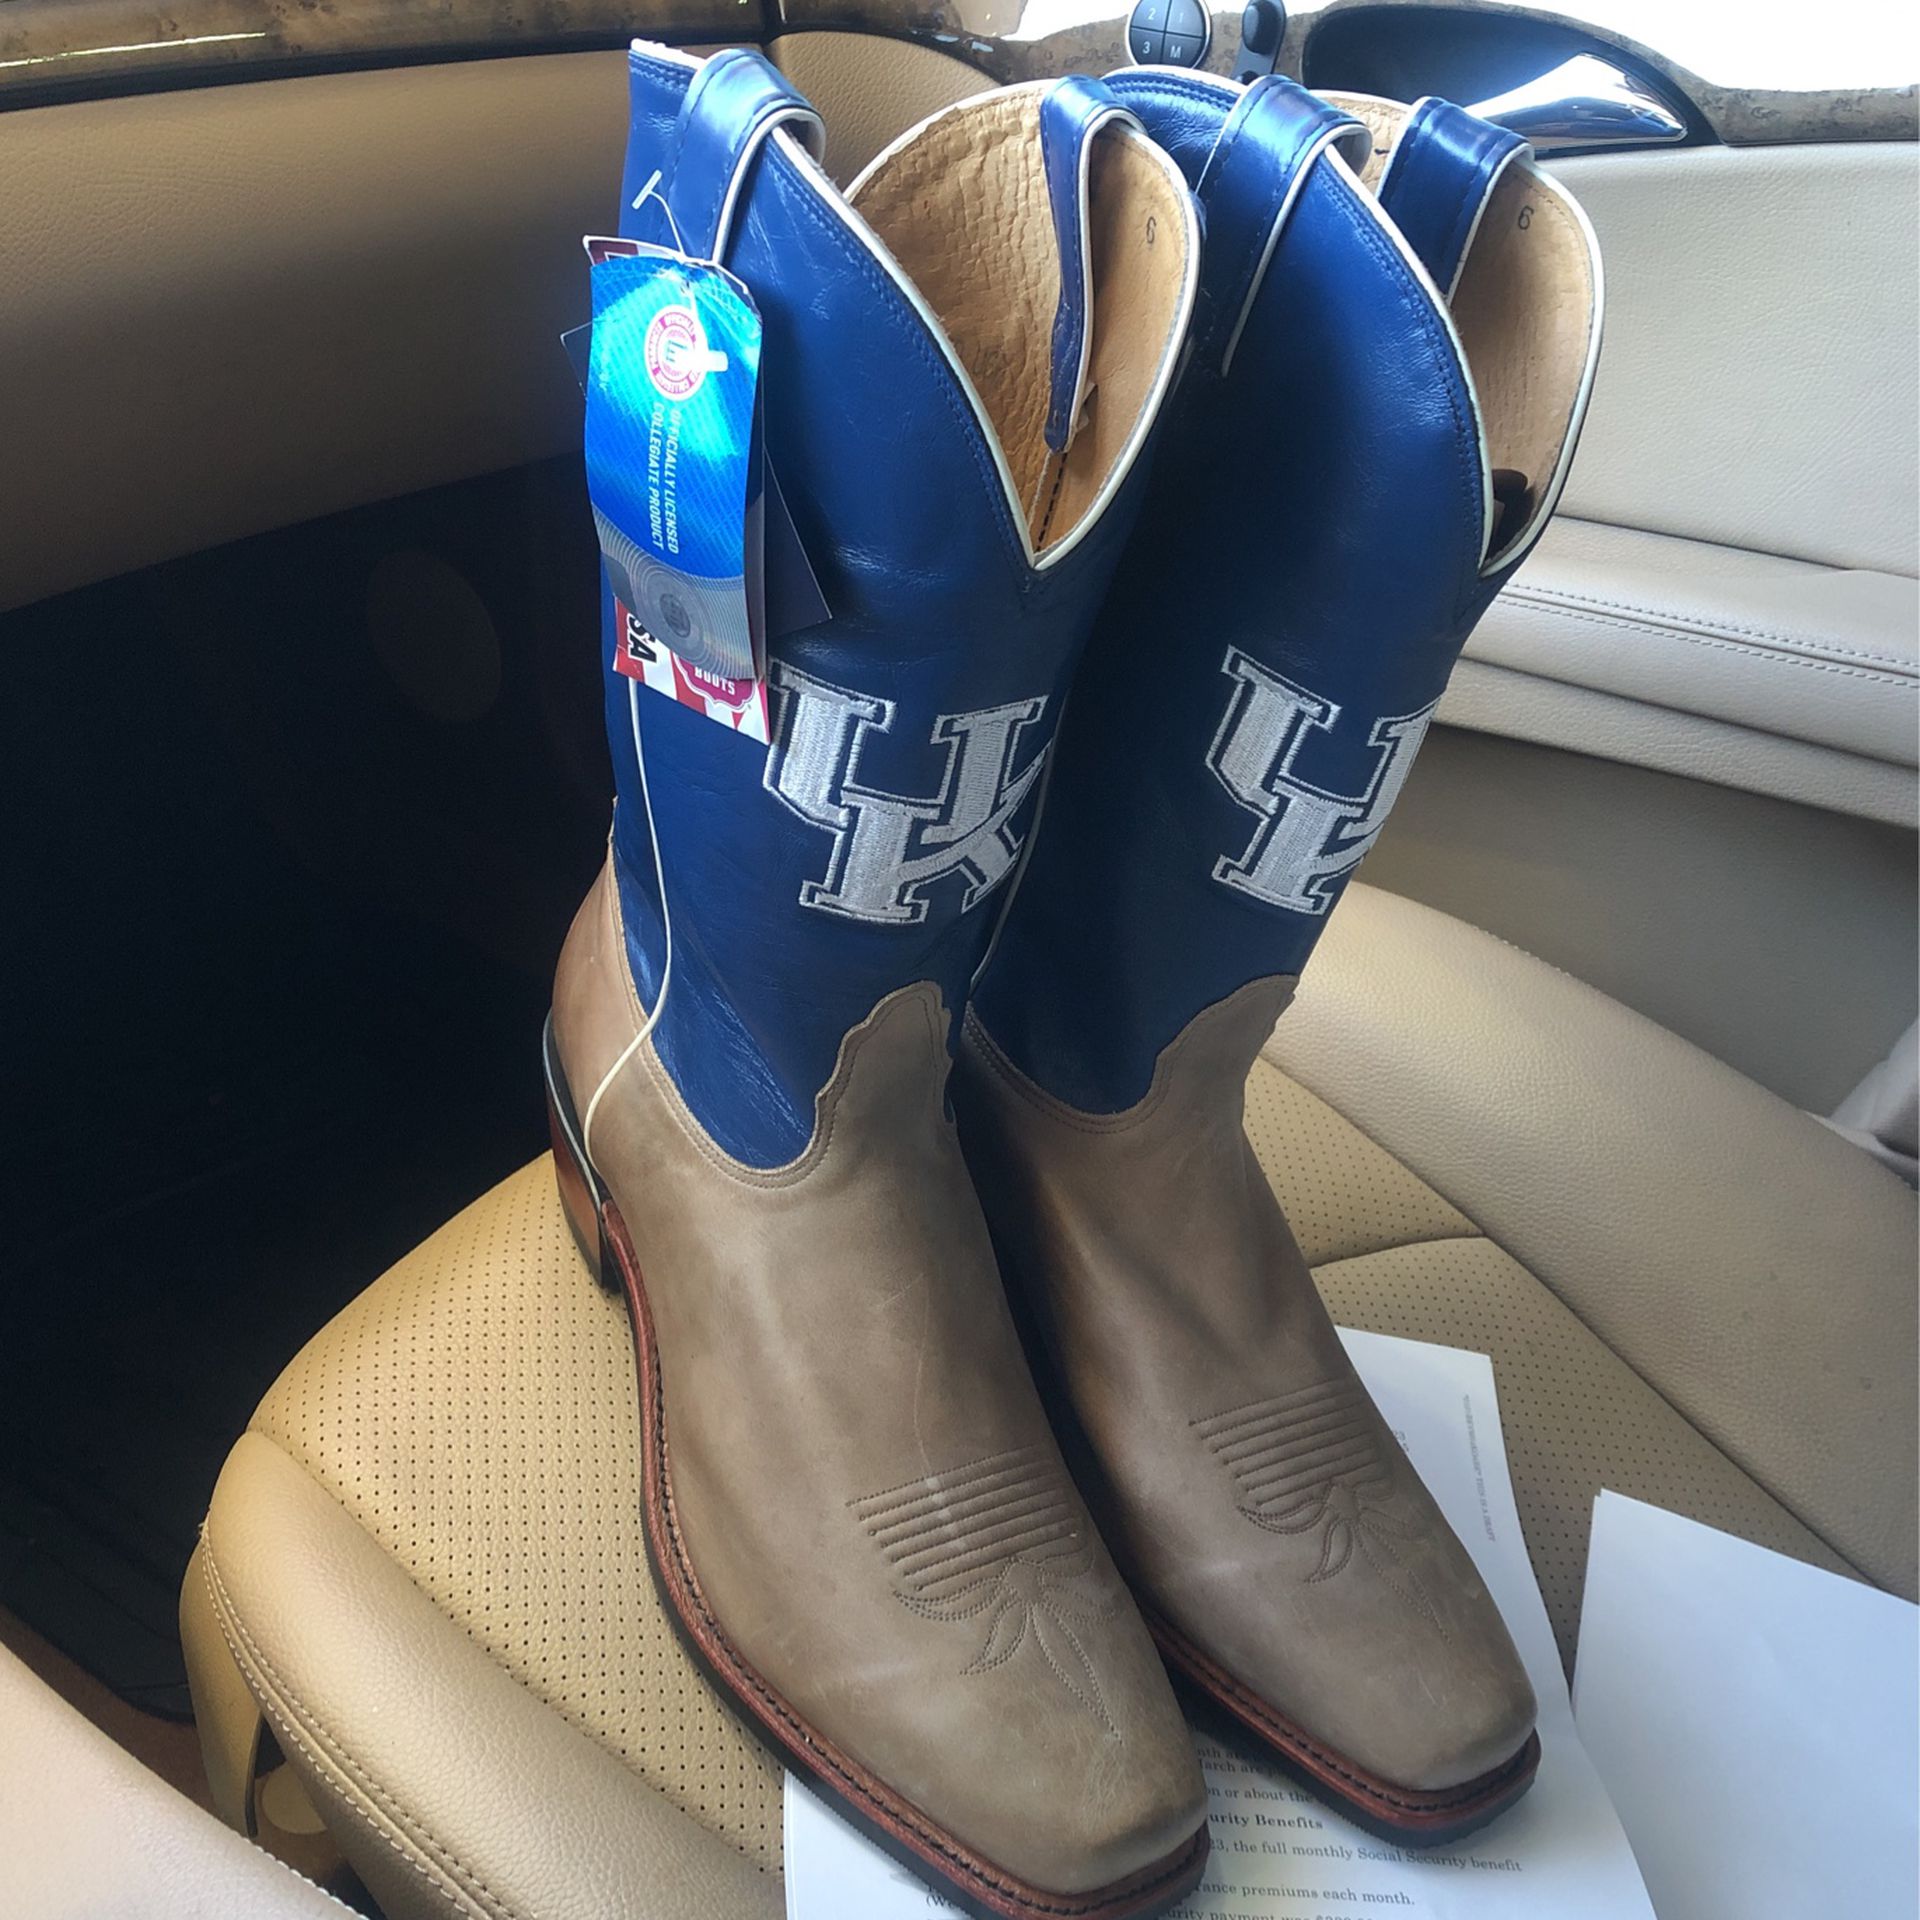 Uk Cowboy Boots 